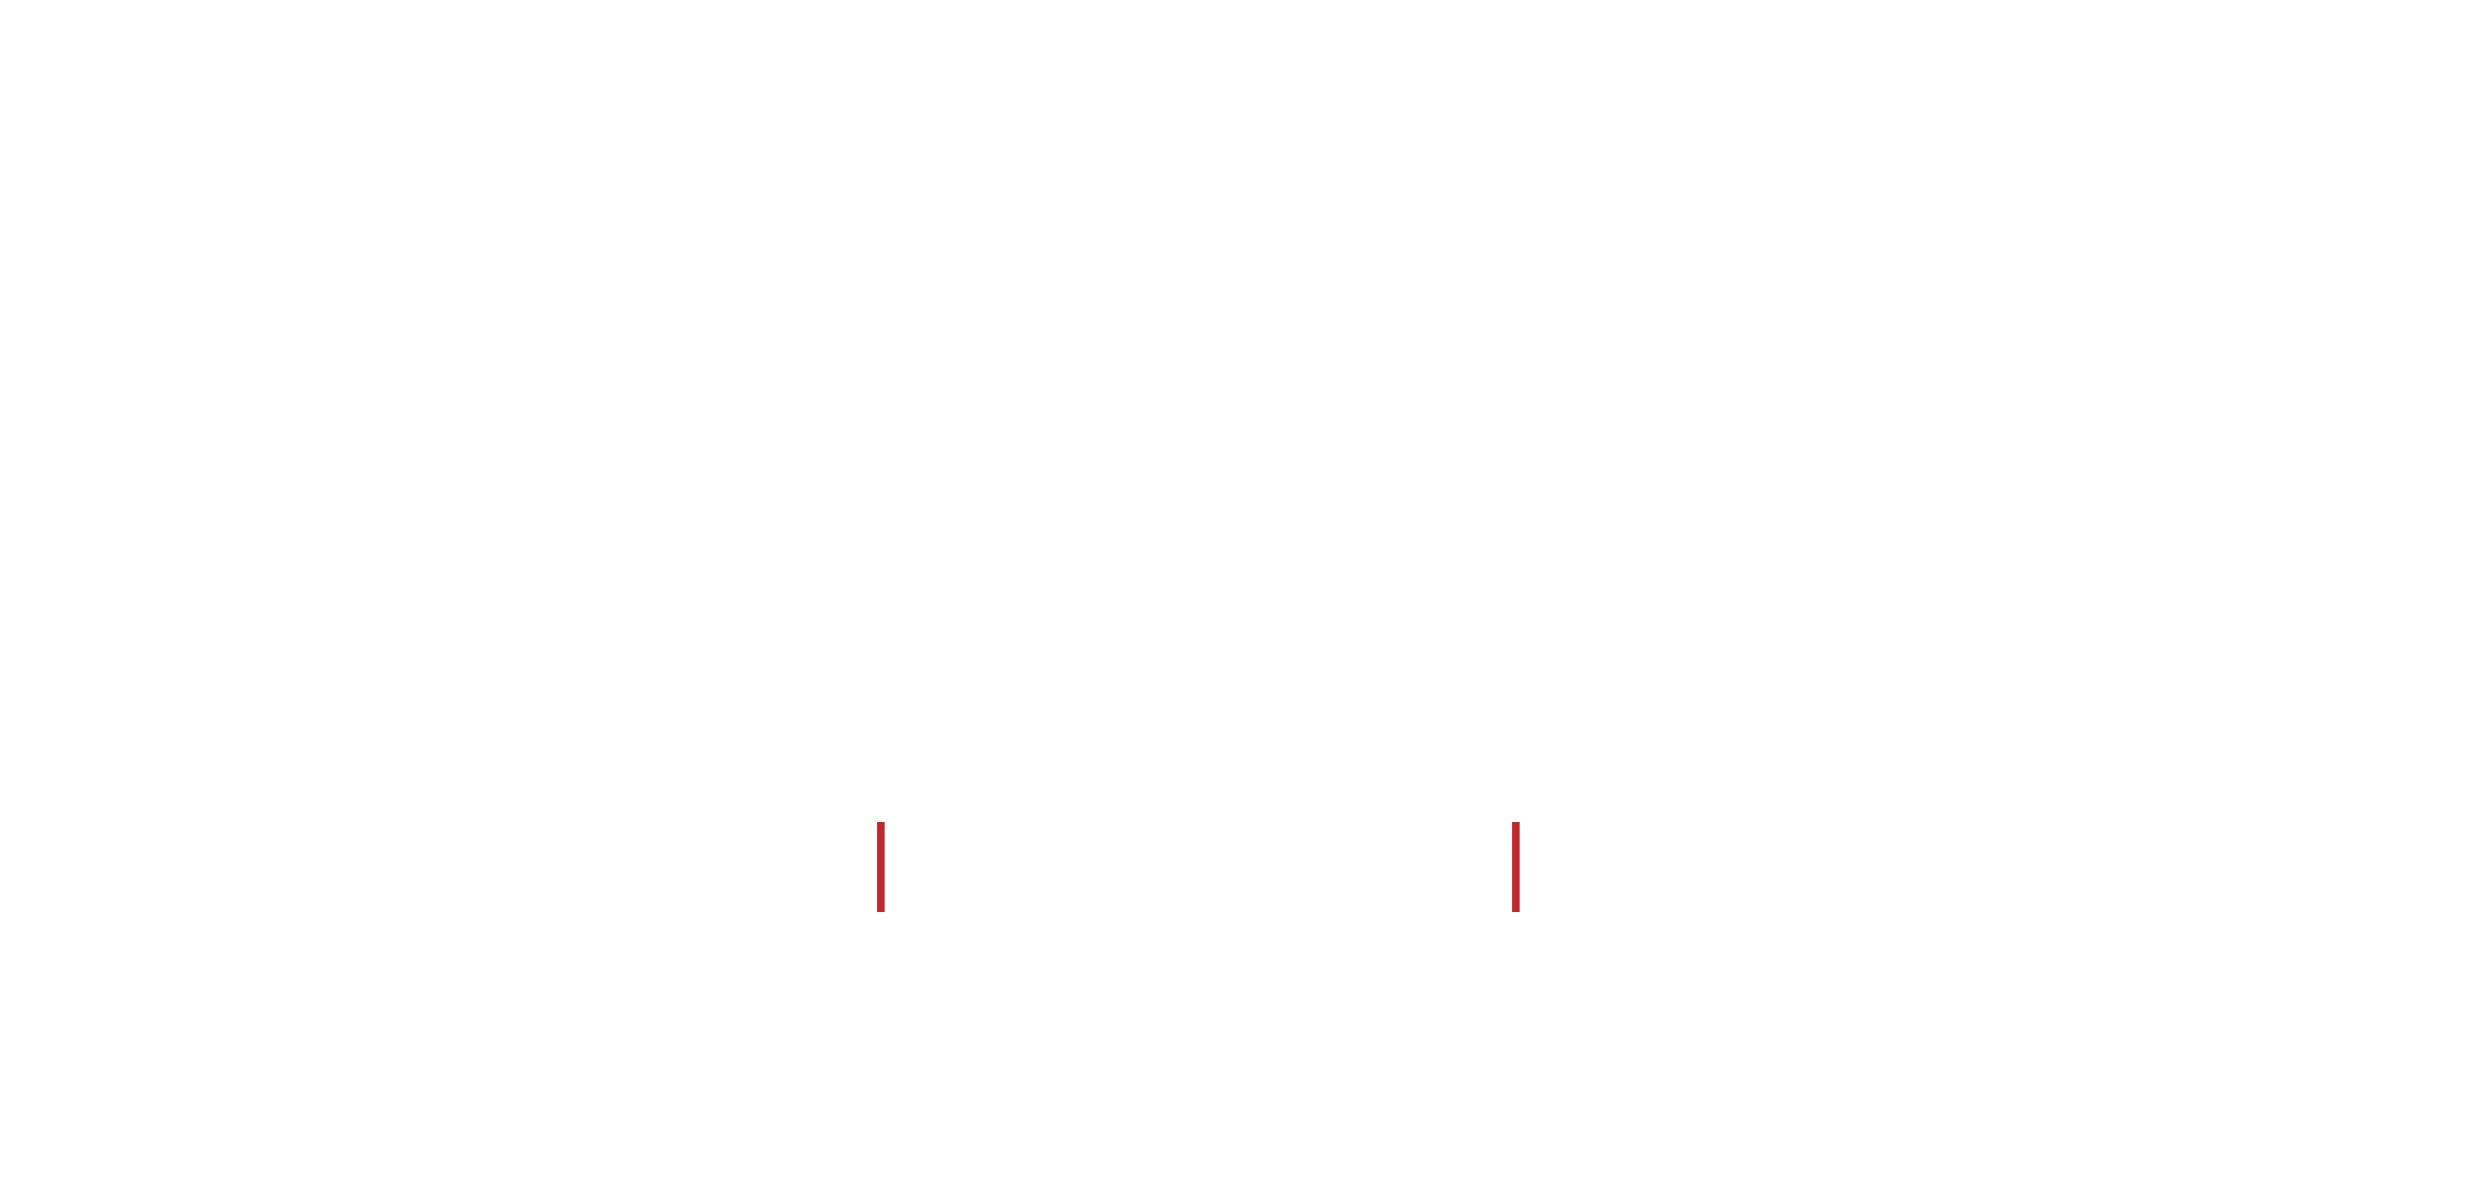 Bella Vita Wellness